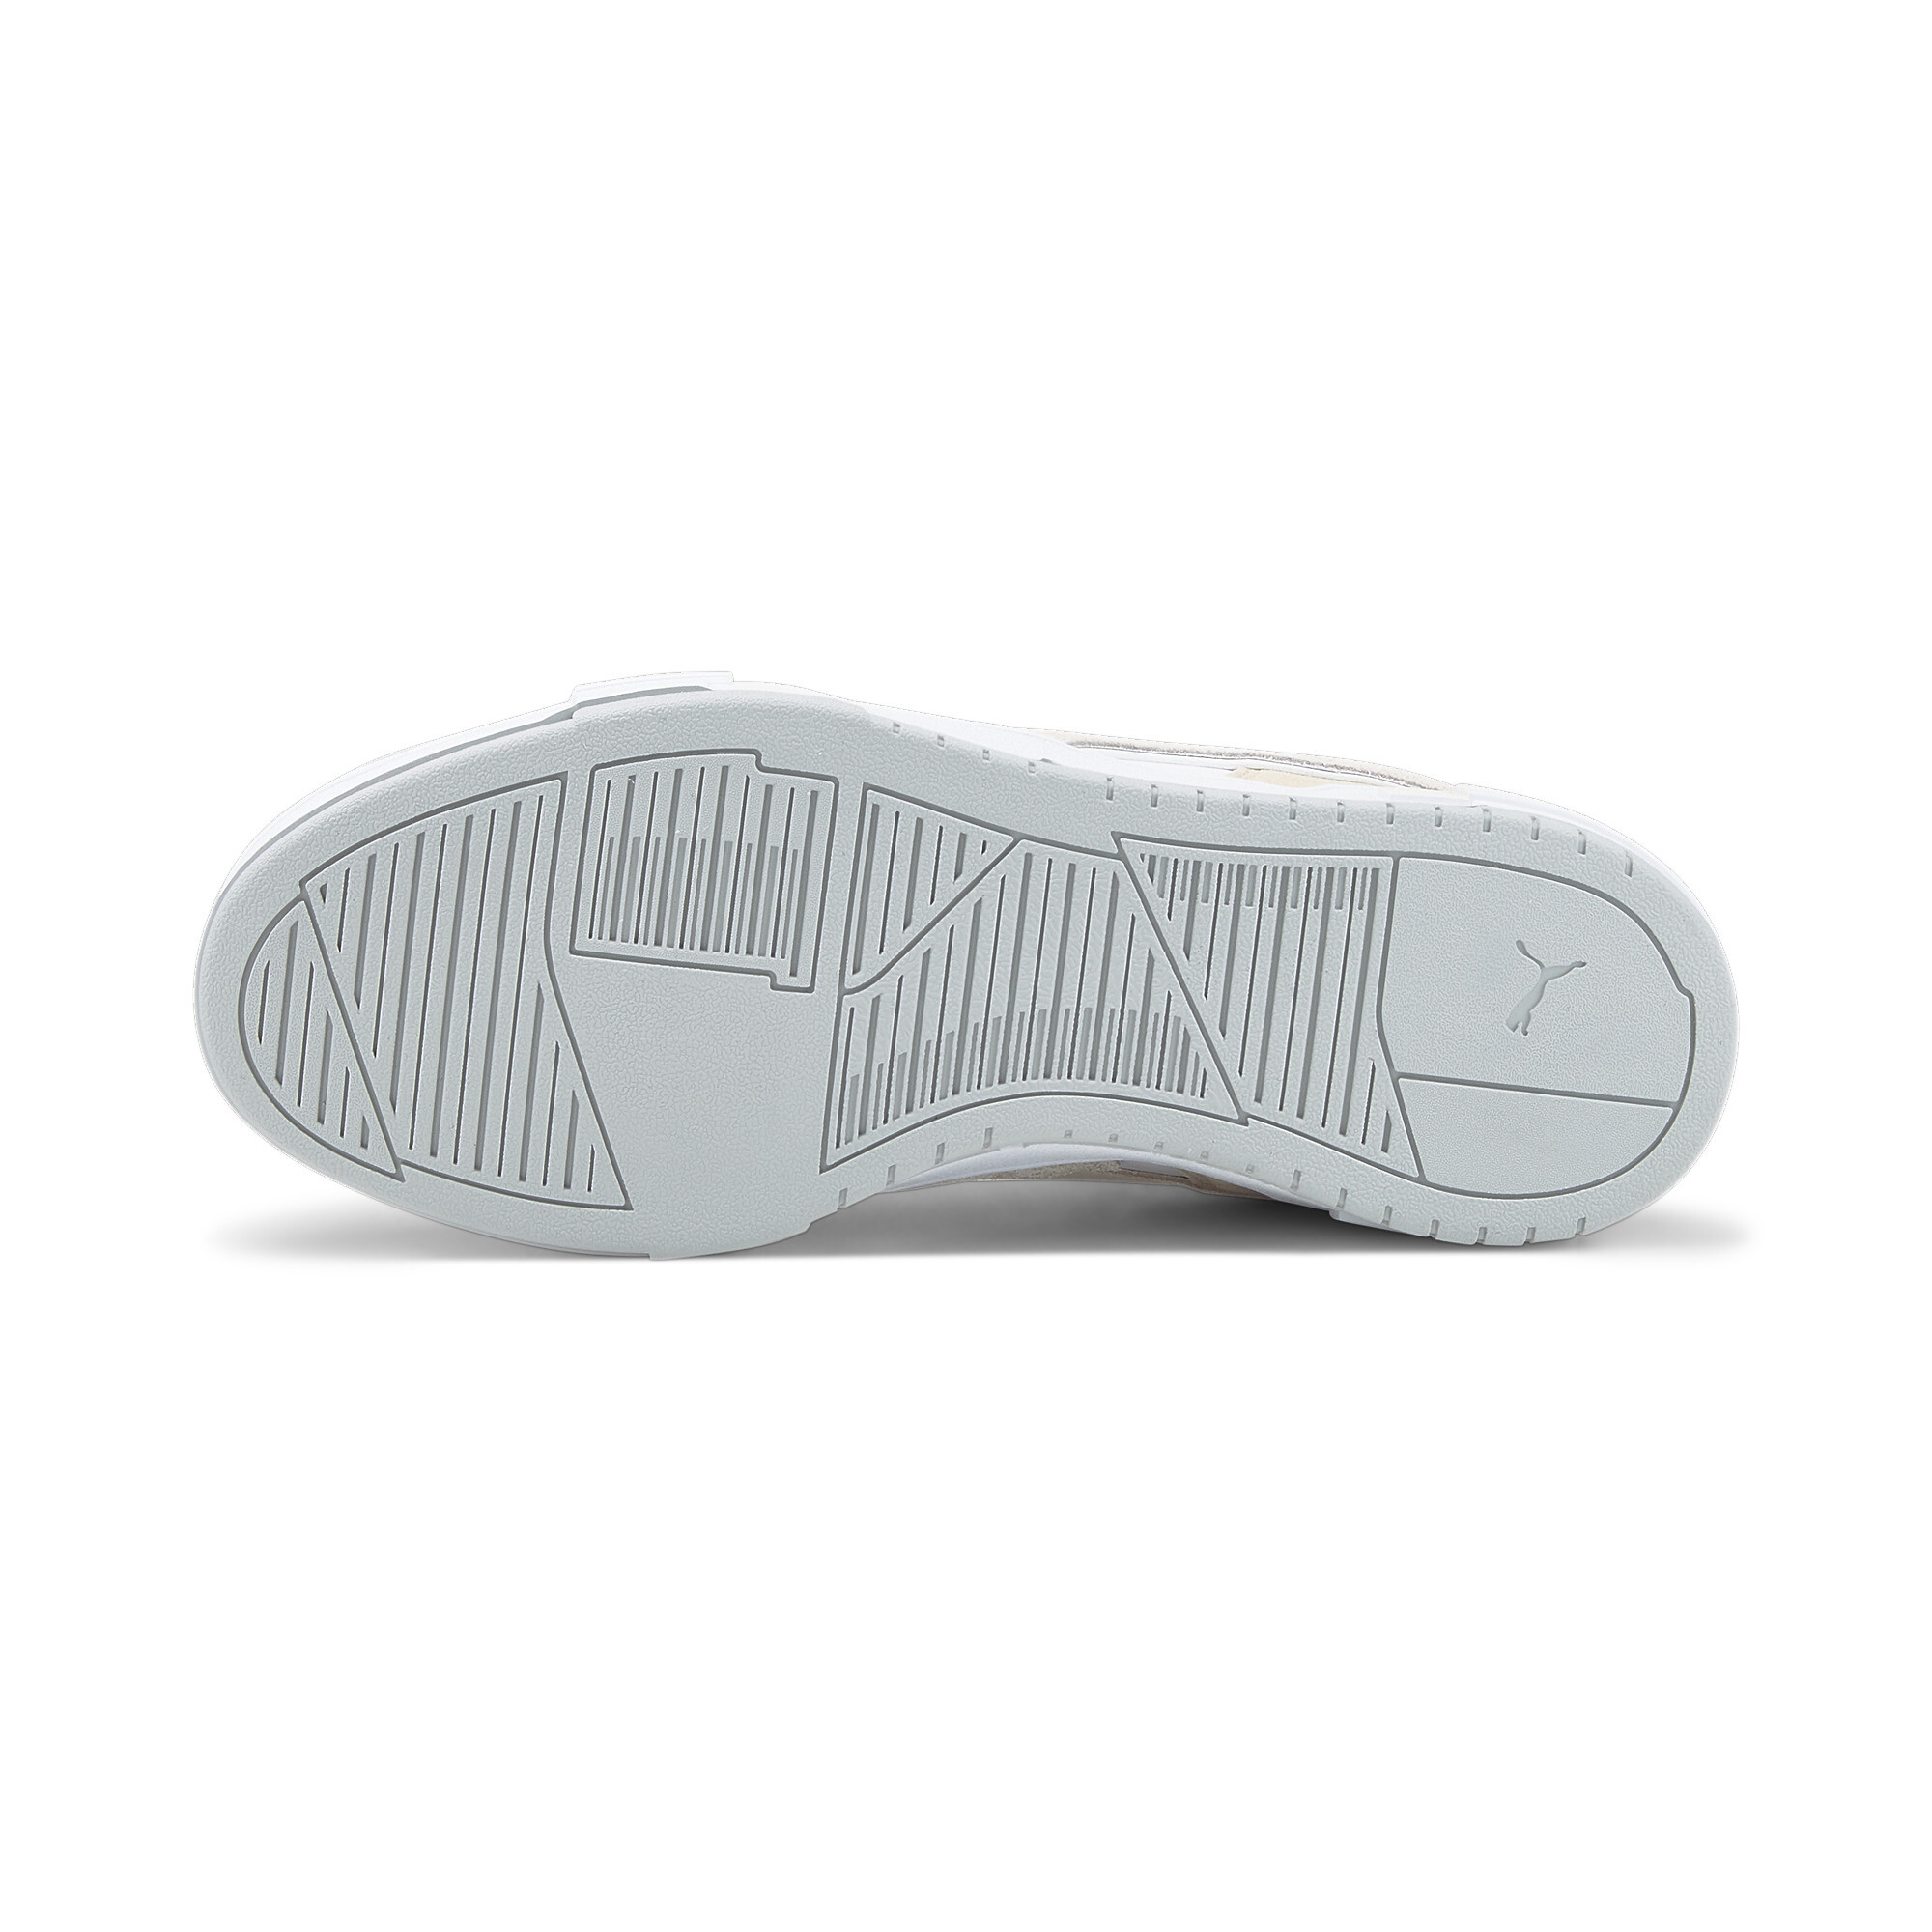 Men's Puma CA Pro Glitch Suede Sneakers, White, Size 42.5, Shoes